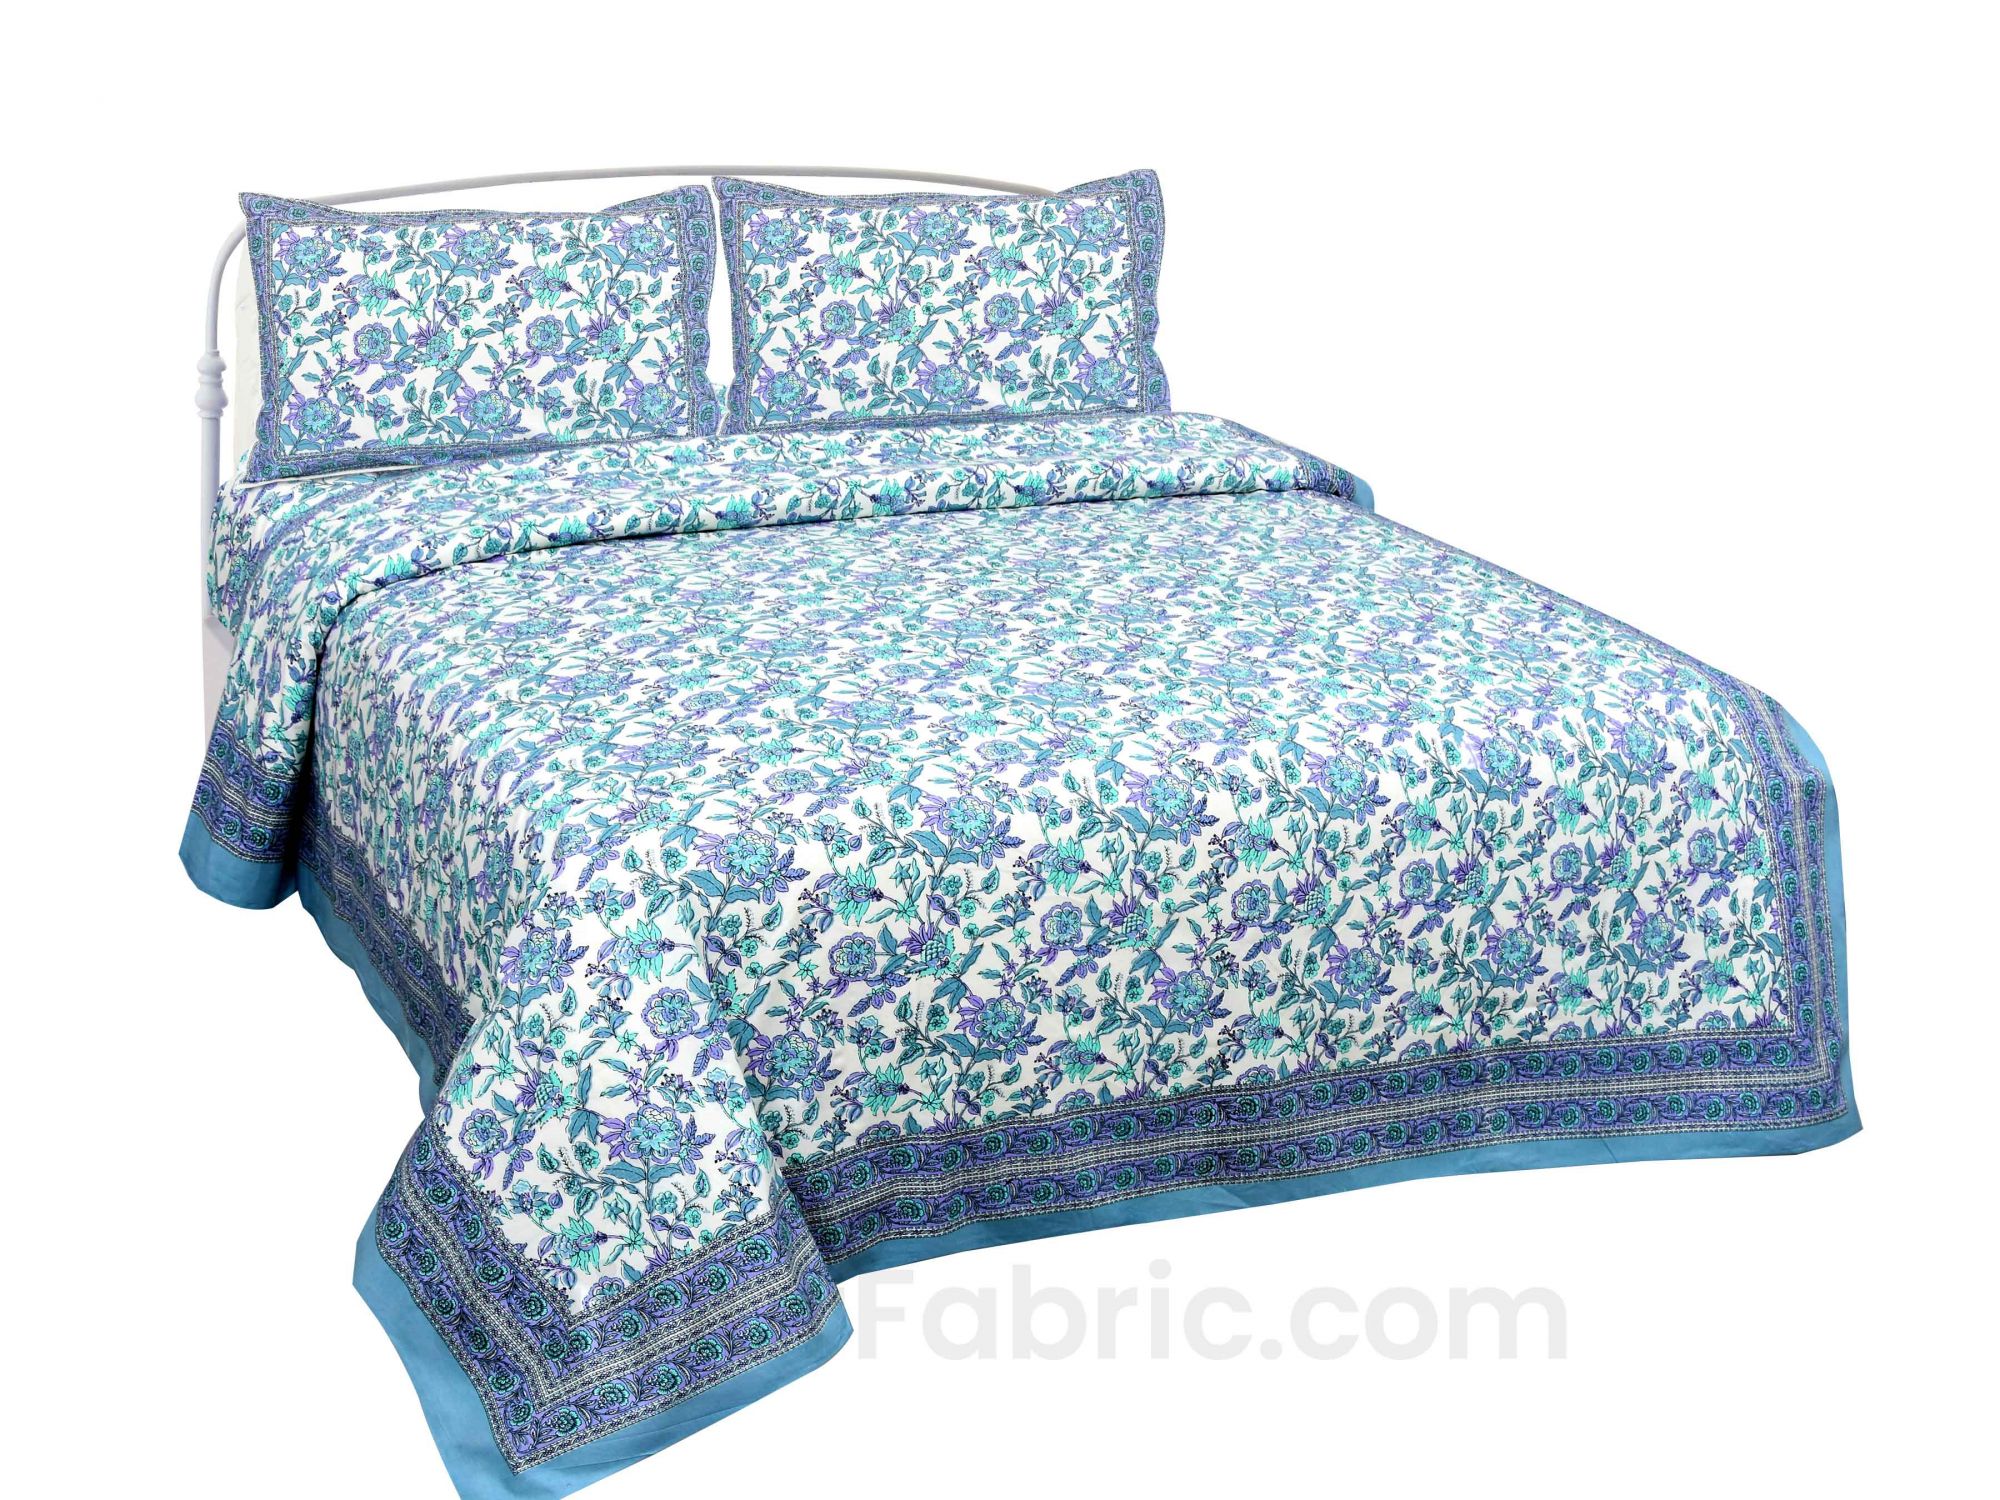 Fantastic Flowers Blue Double Bedsheet